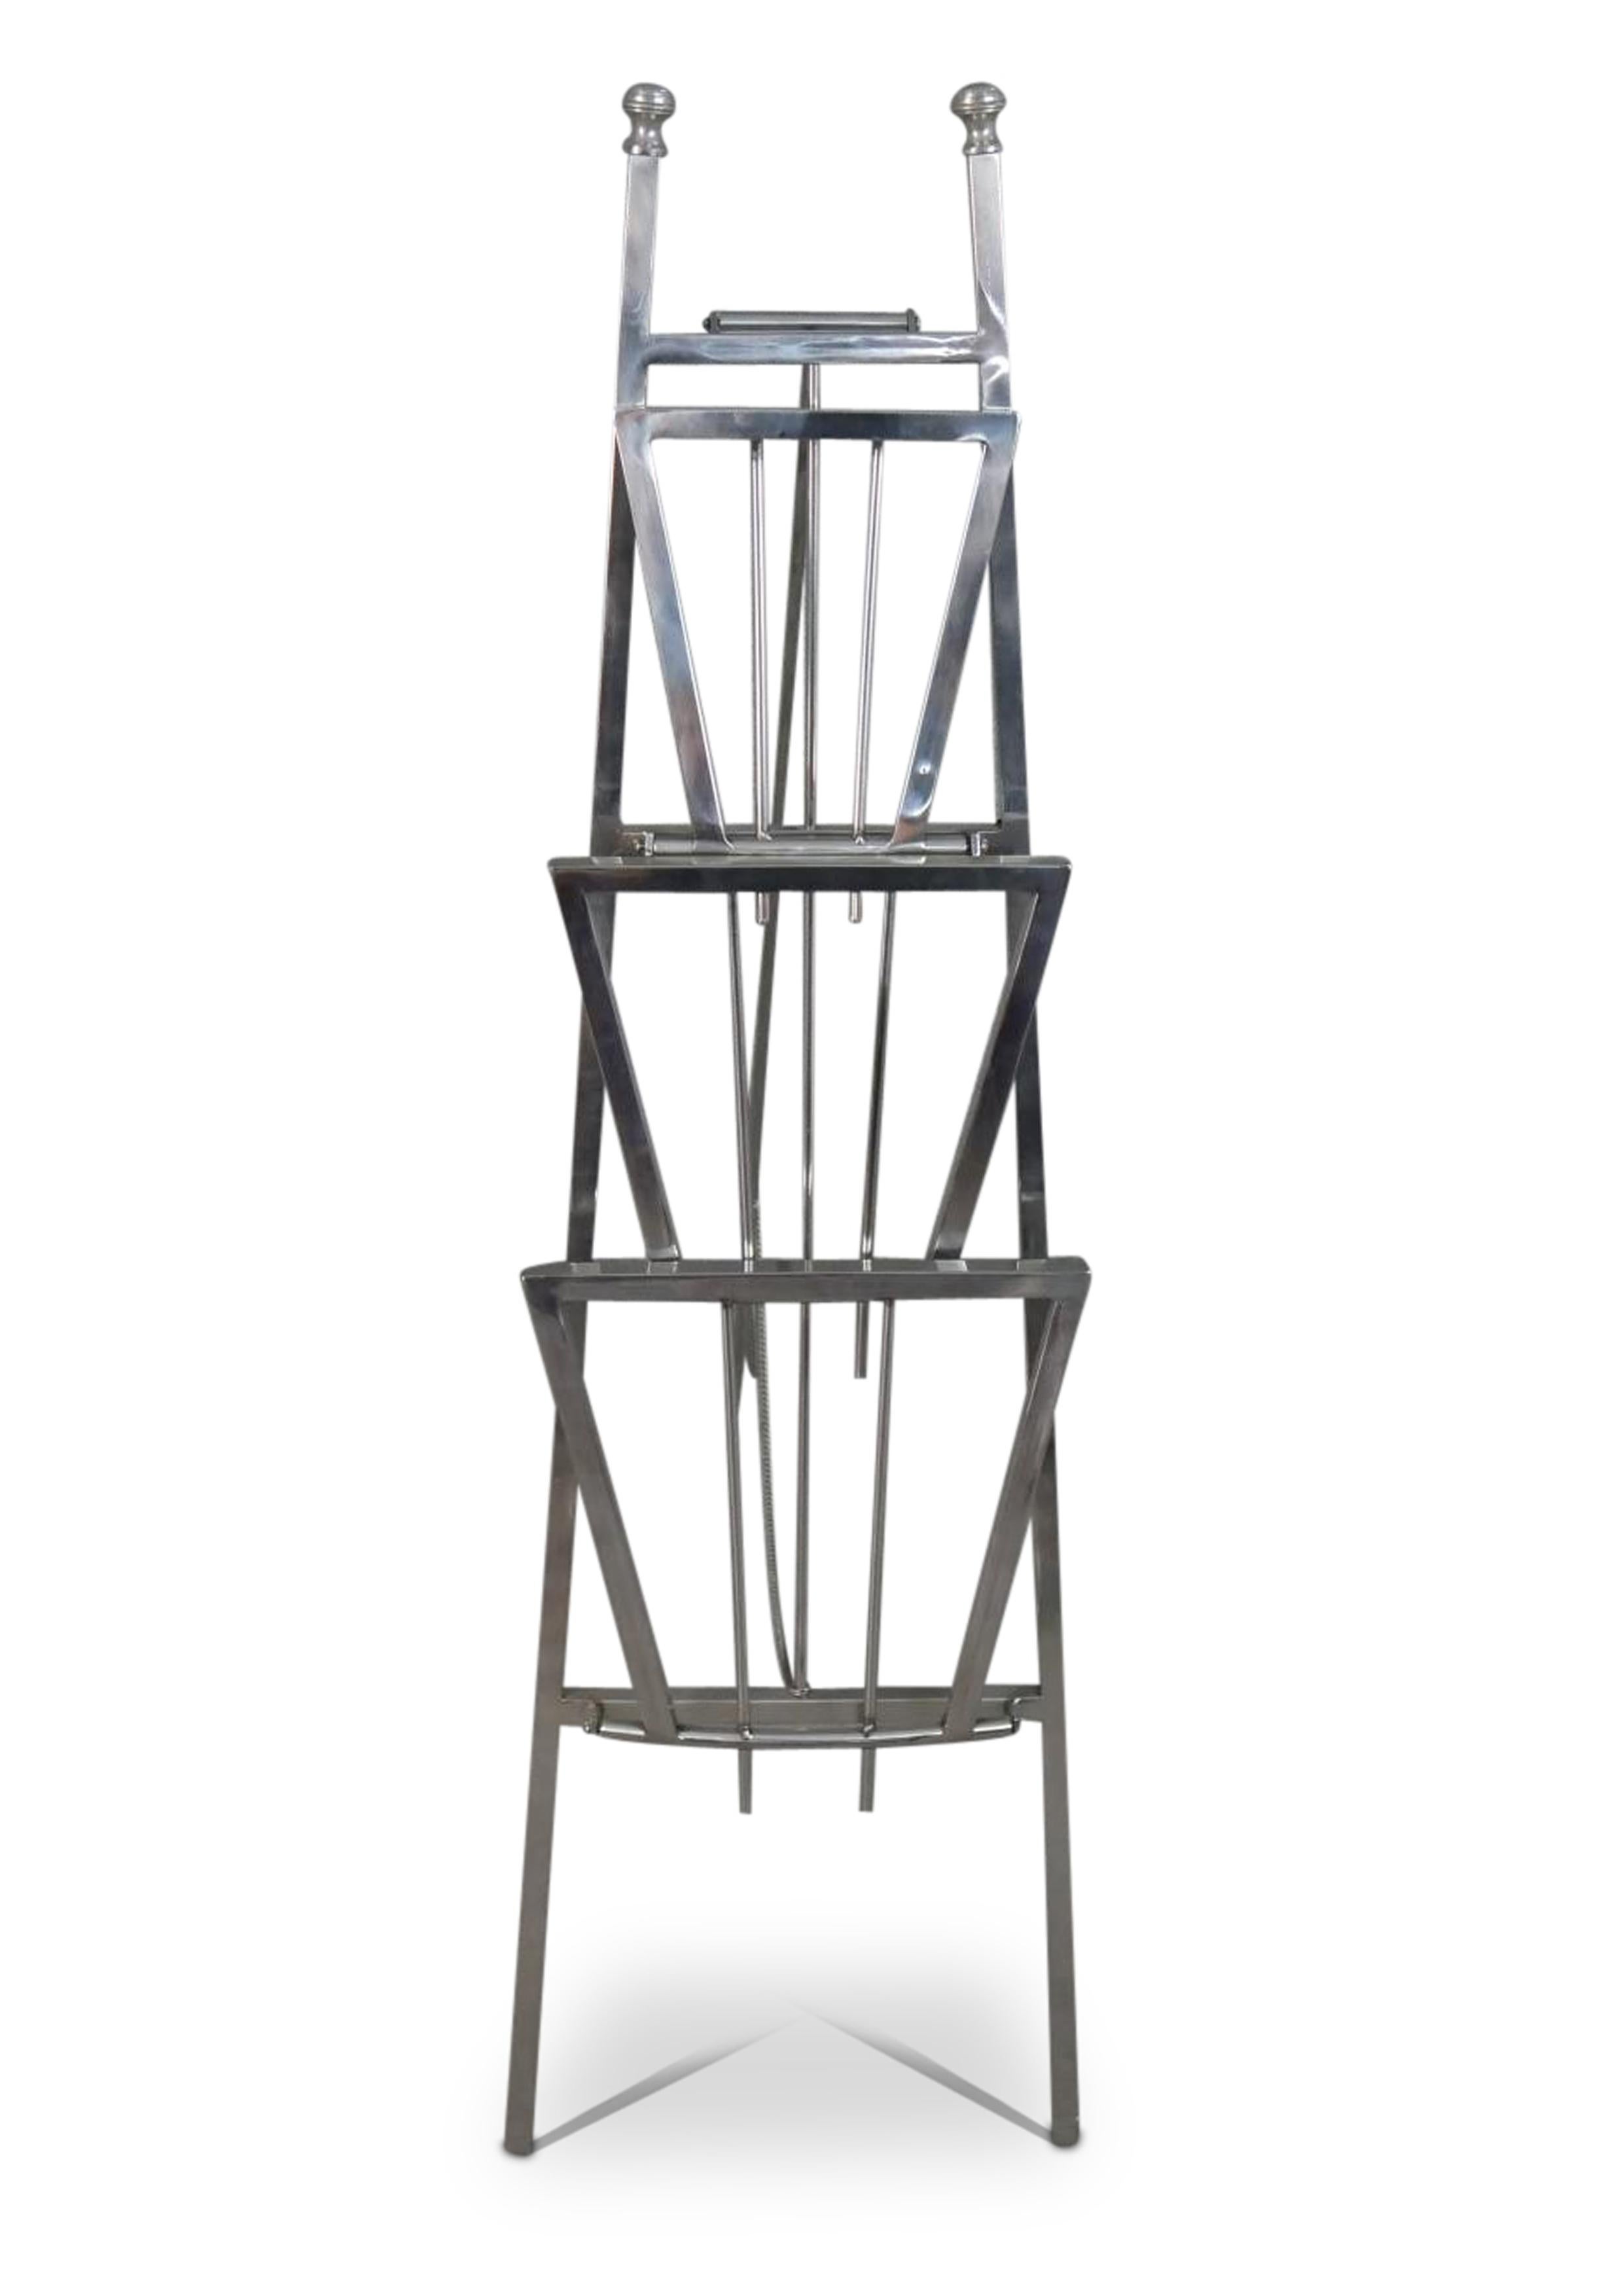 Art Deco Chromed Steel Folding Magazine Rack in a Figurative Ladder Form 1